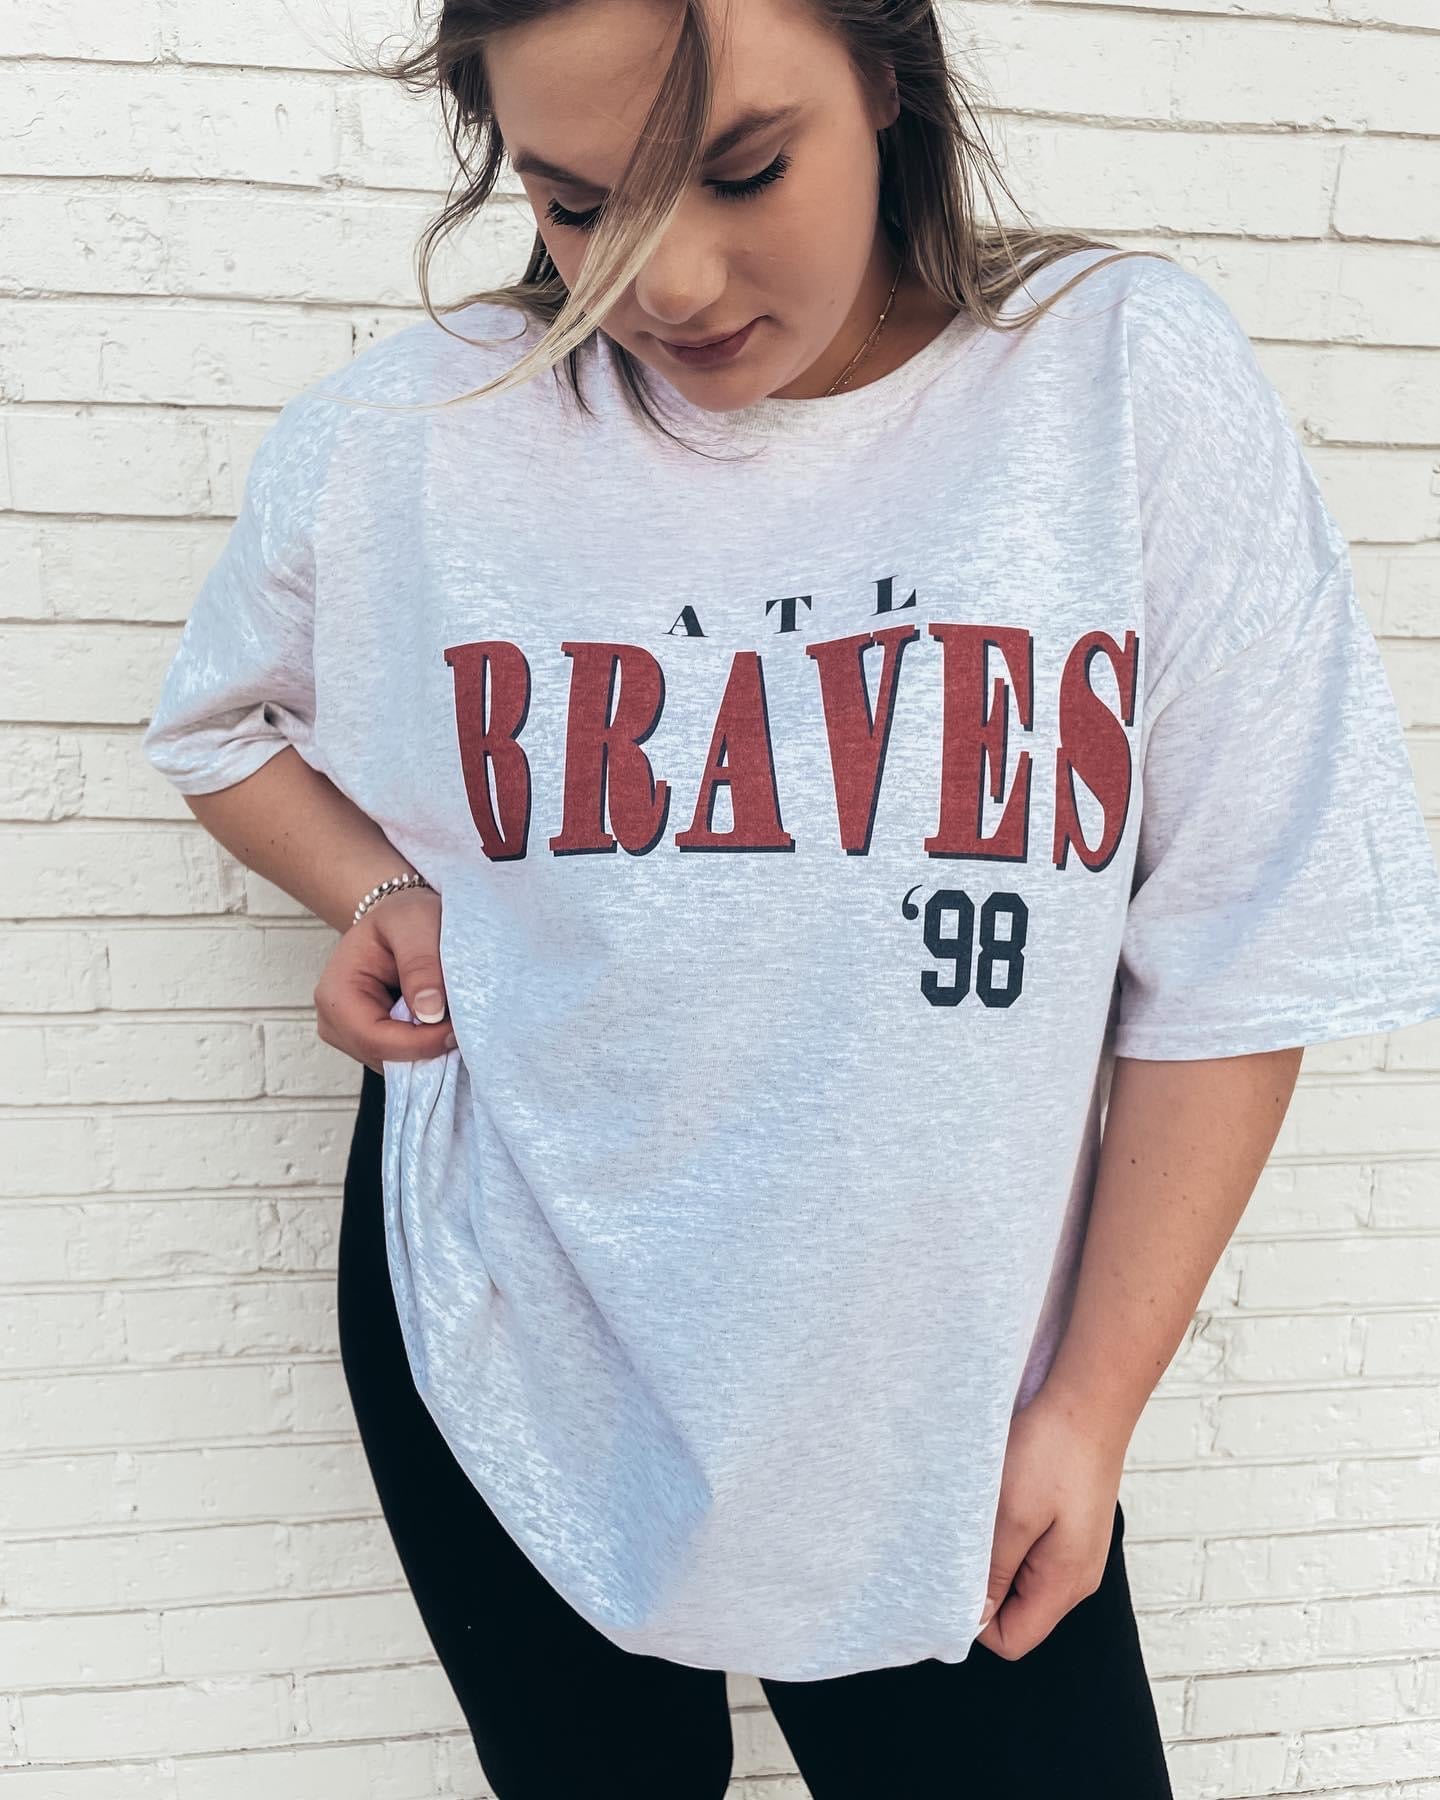 98 Braves graphic tee/sweatshirt